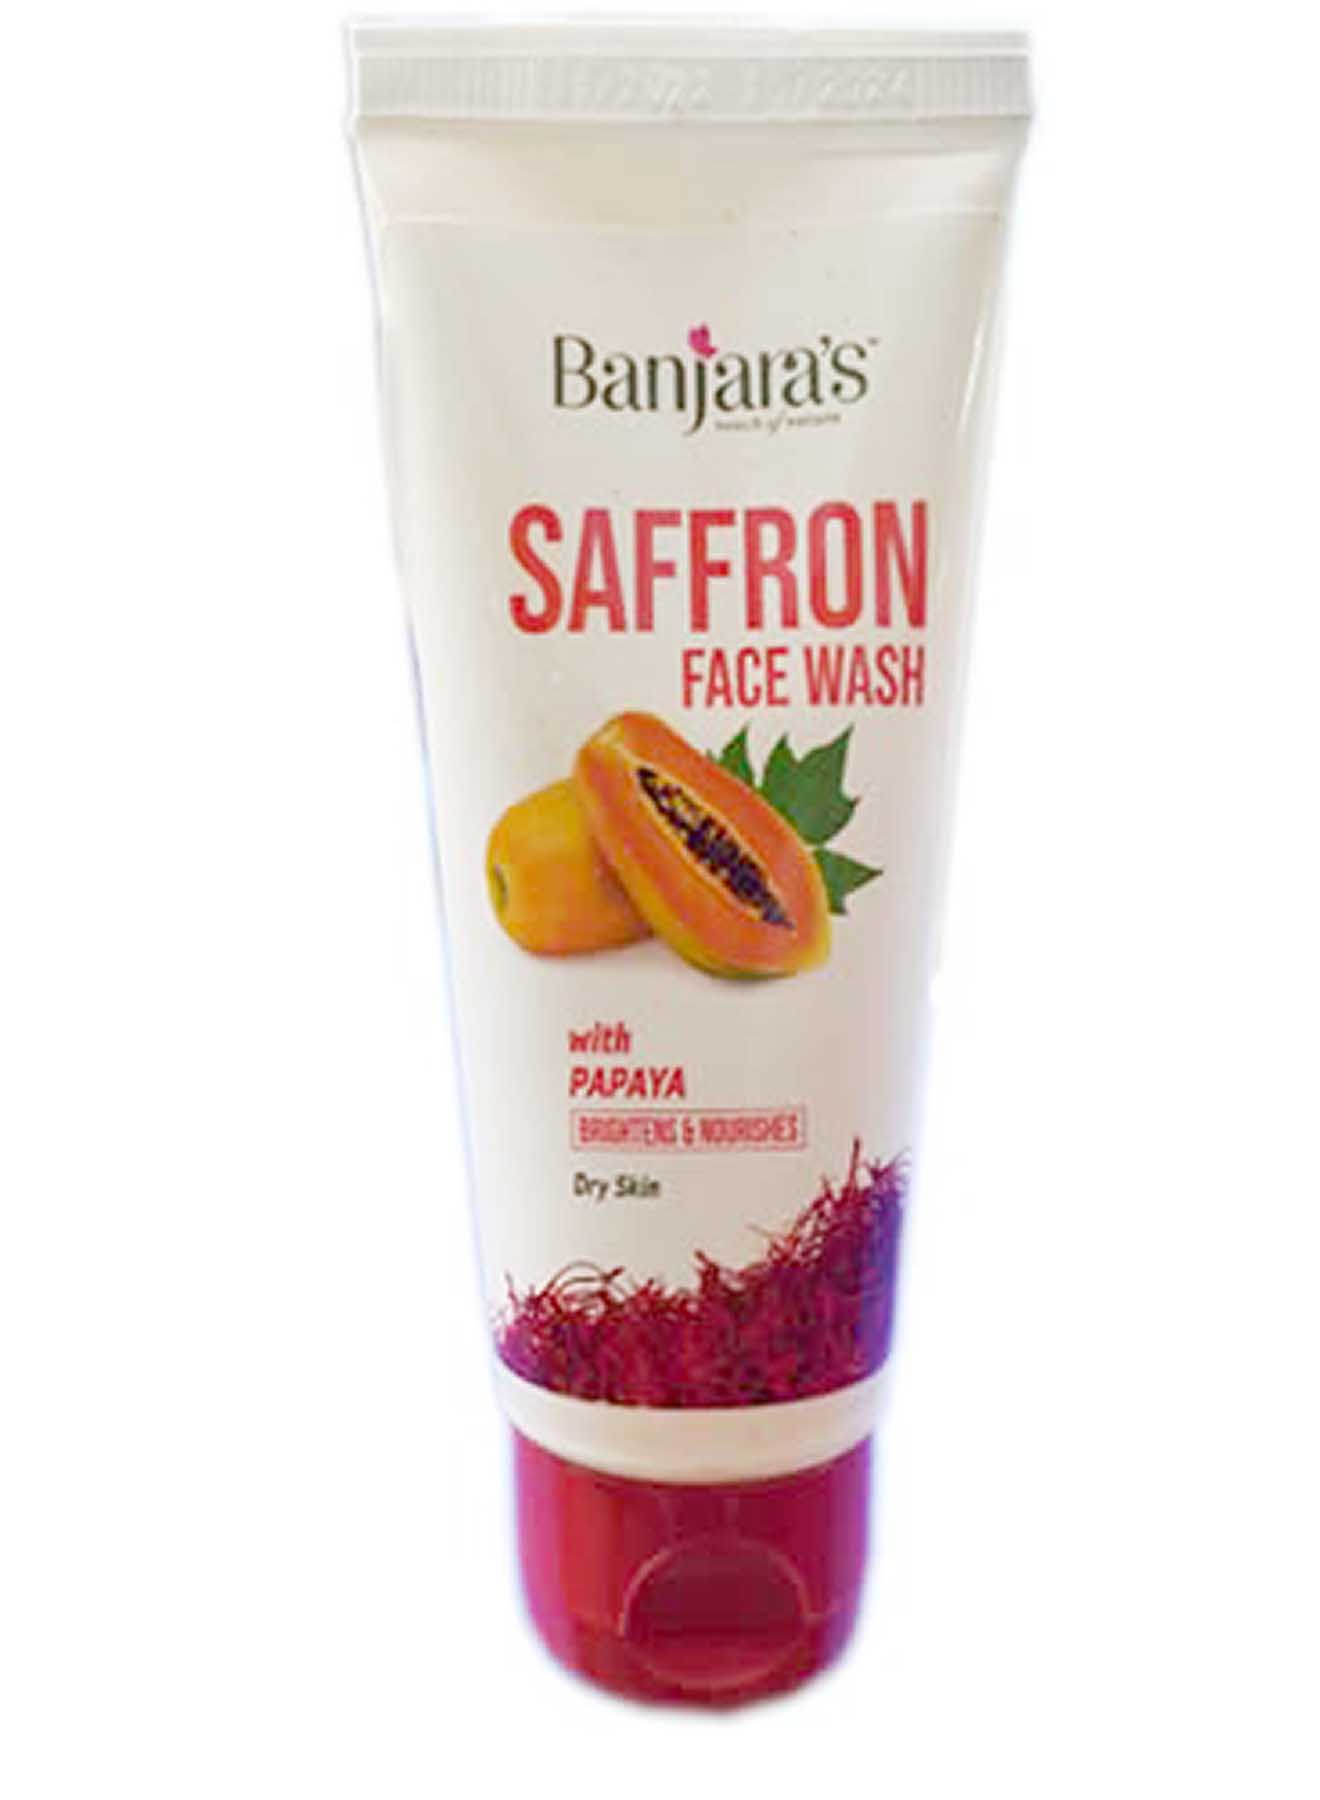 Banjaras Saffron Face wash with Papaya 50ml Value Pack of 2 